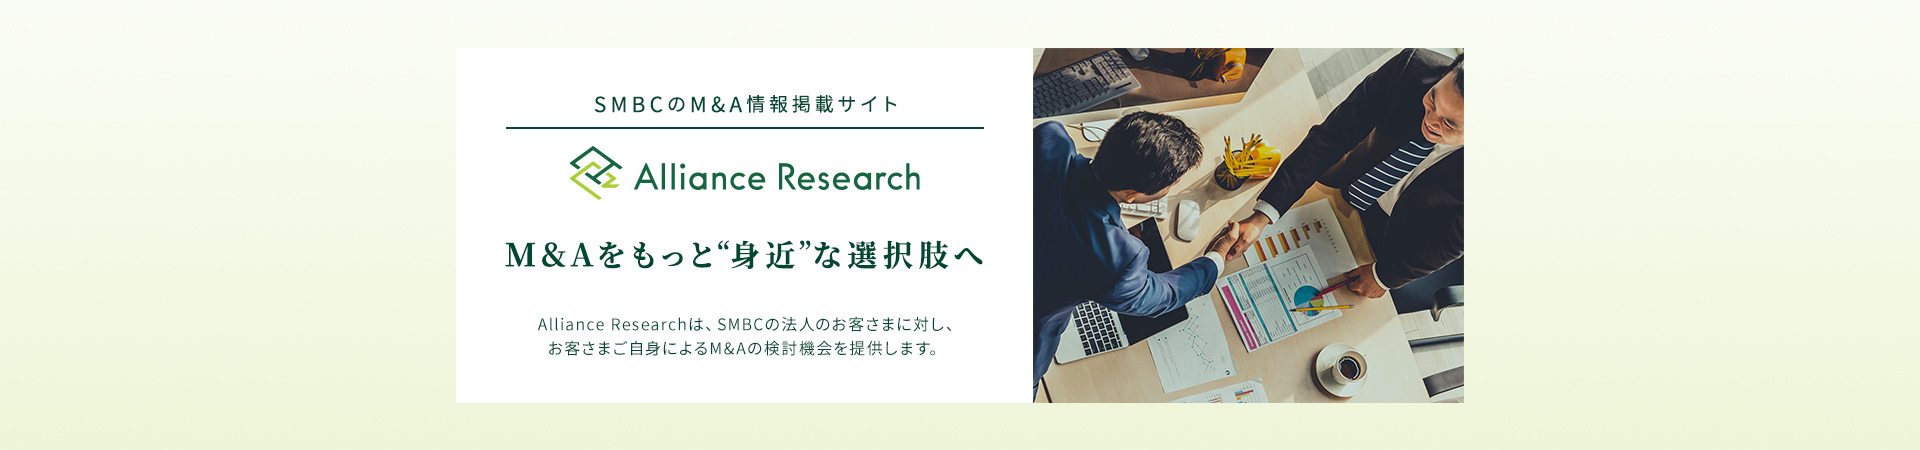 M&A�}�b�`���O�T�C�g Alliance Research